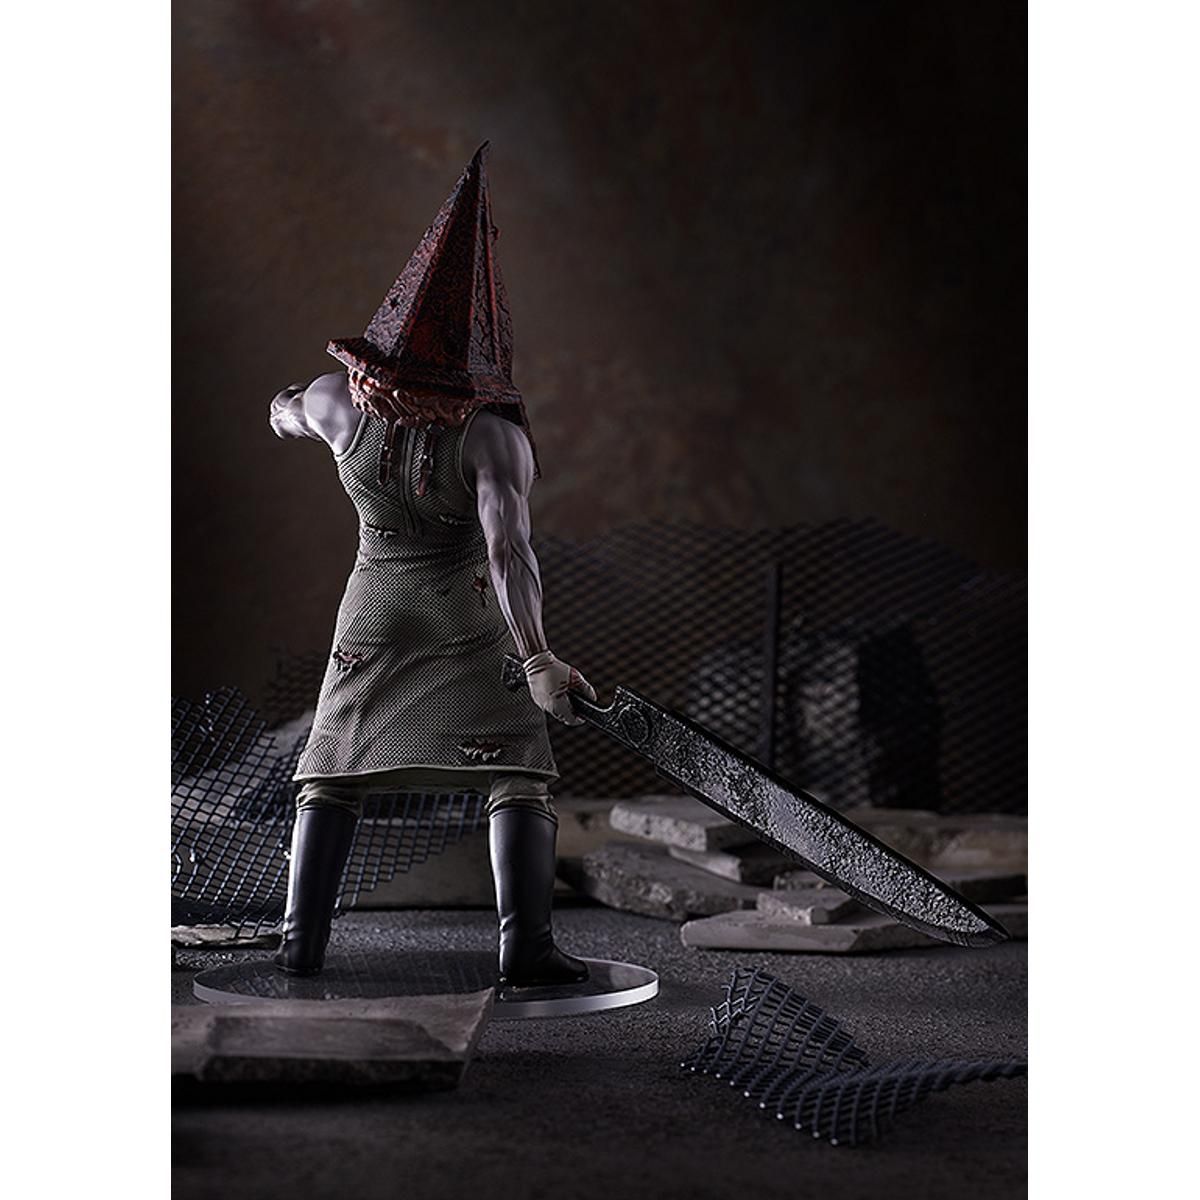 Silent Hill Pyramid Head Figure 2-1